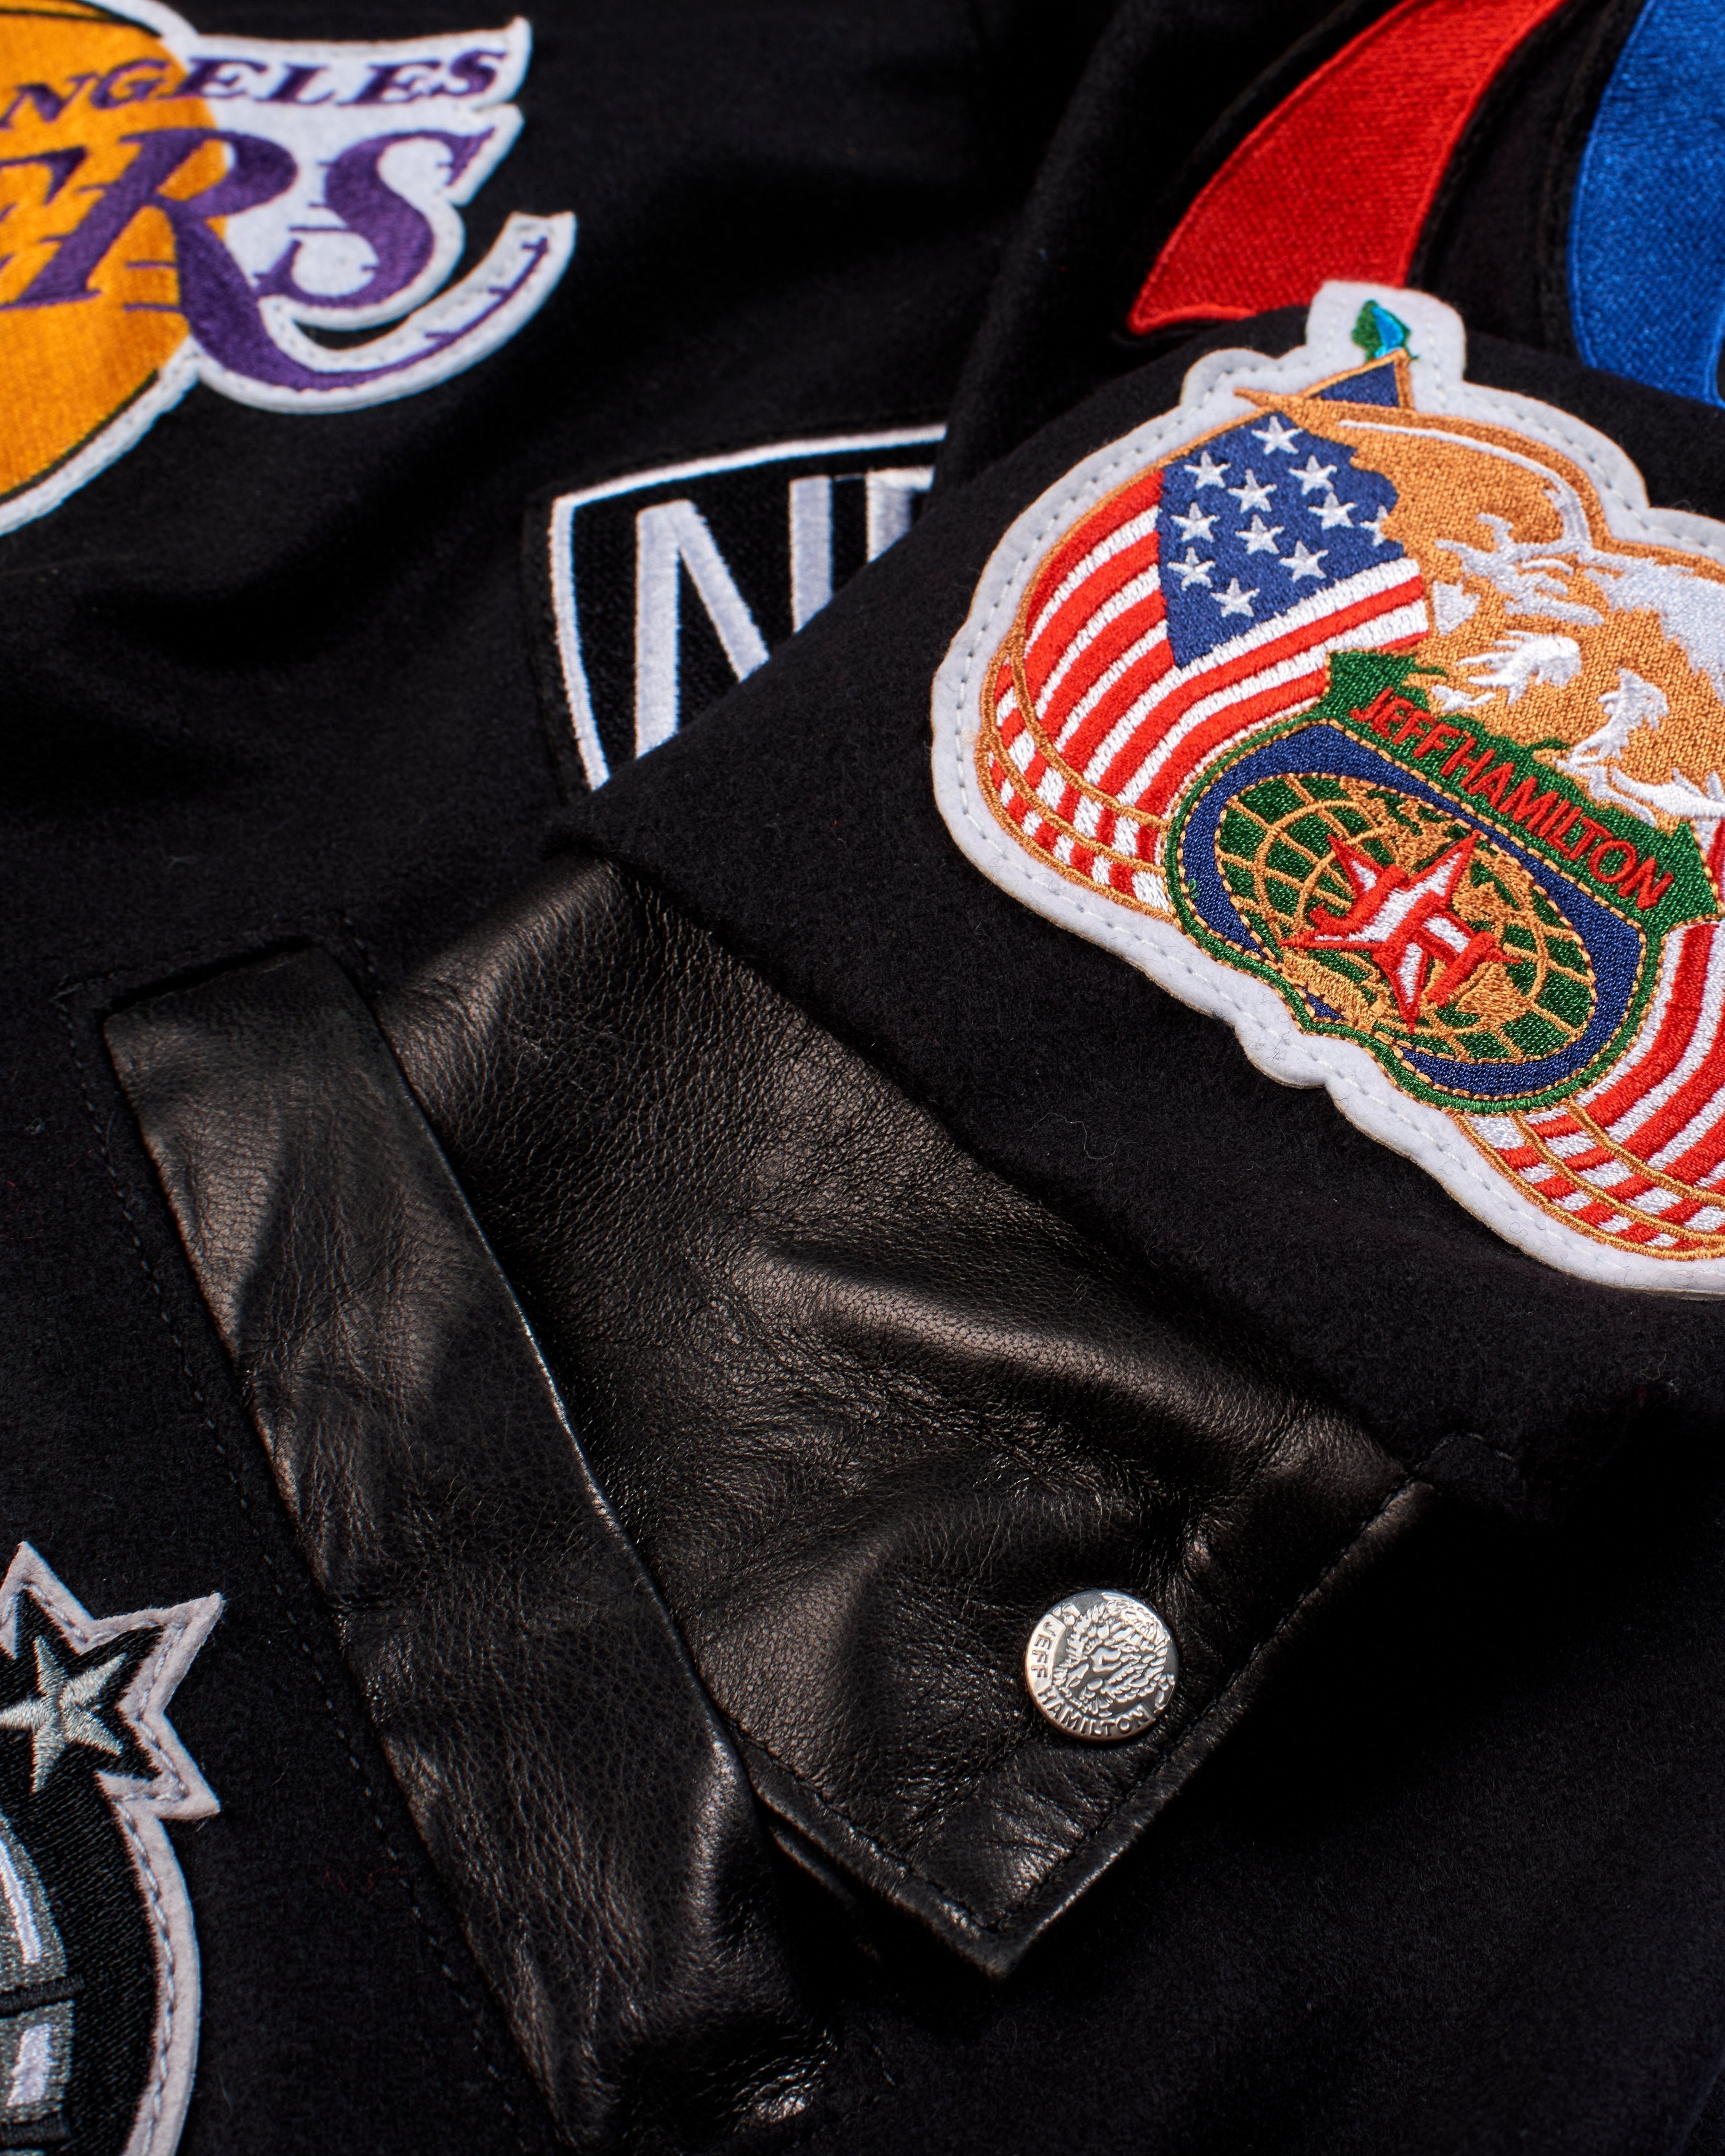 NBA Collage Wool & Leather Jacket Purple